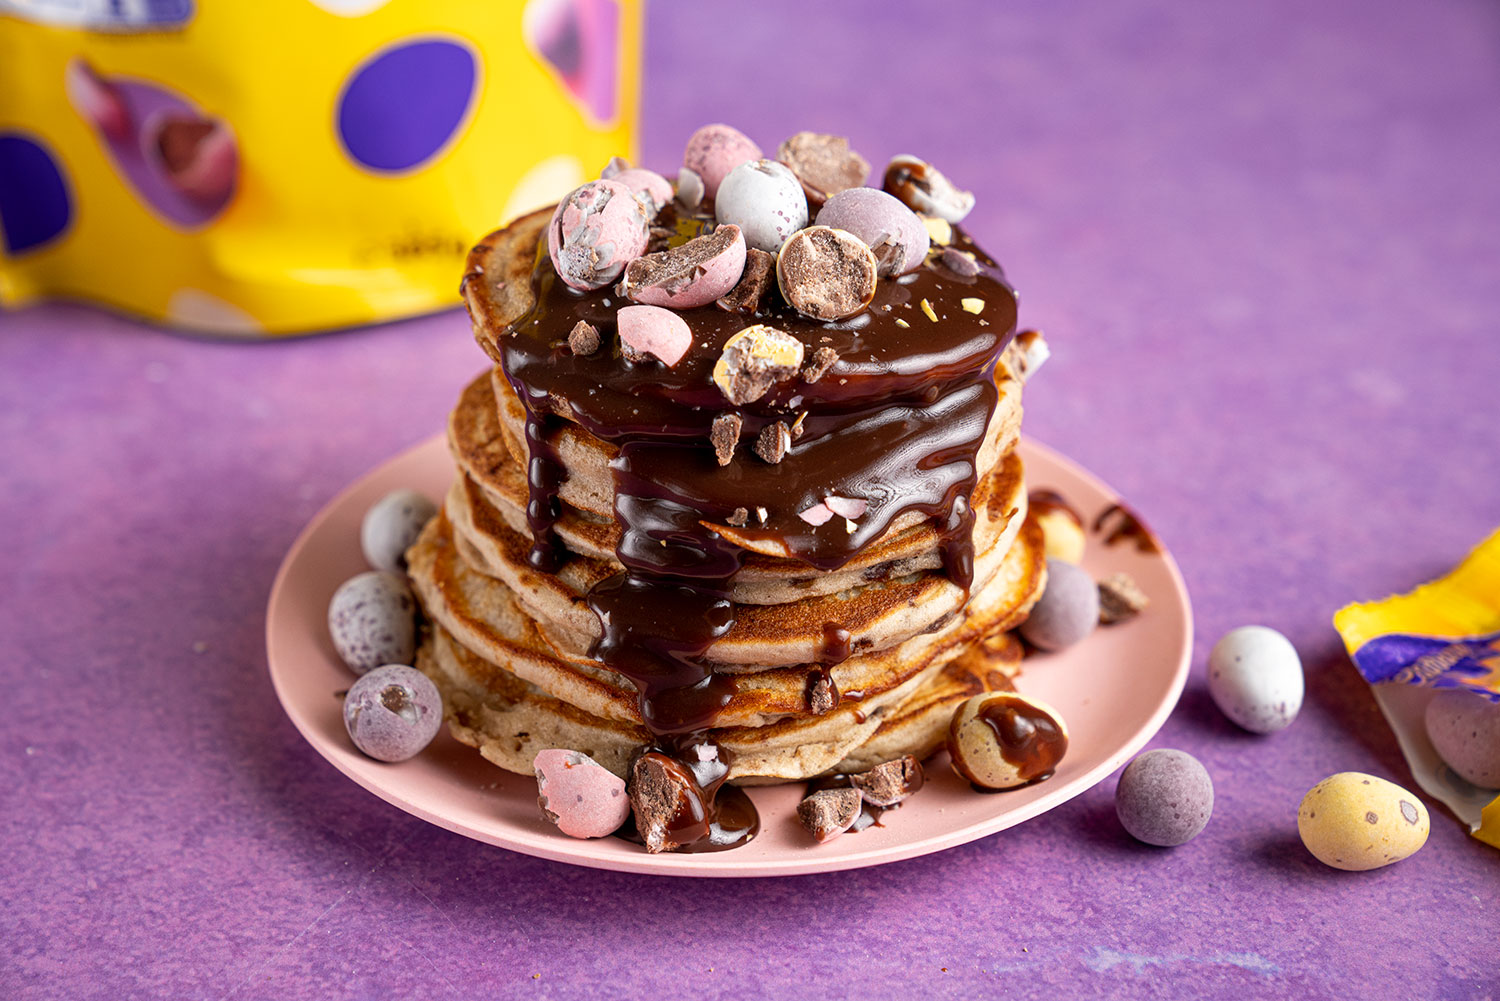 https://glutenfreecuppatea.co.uk/wp-content/uploads/2022/02/gluten-free-mini-egg-pancakes-recipe-featured.jpg